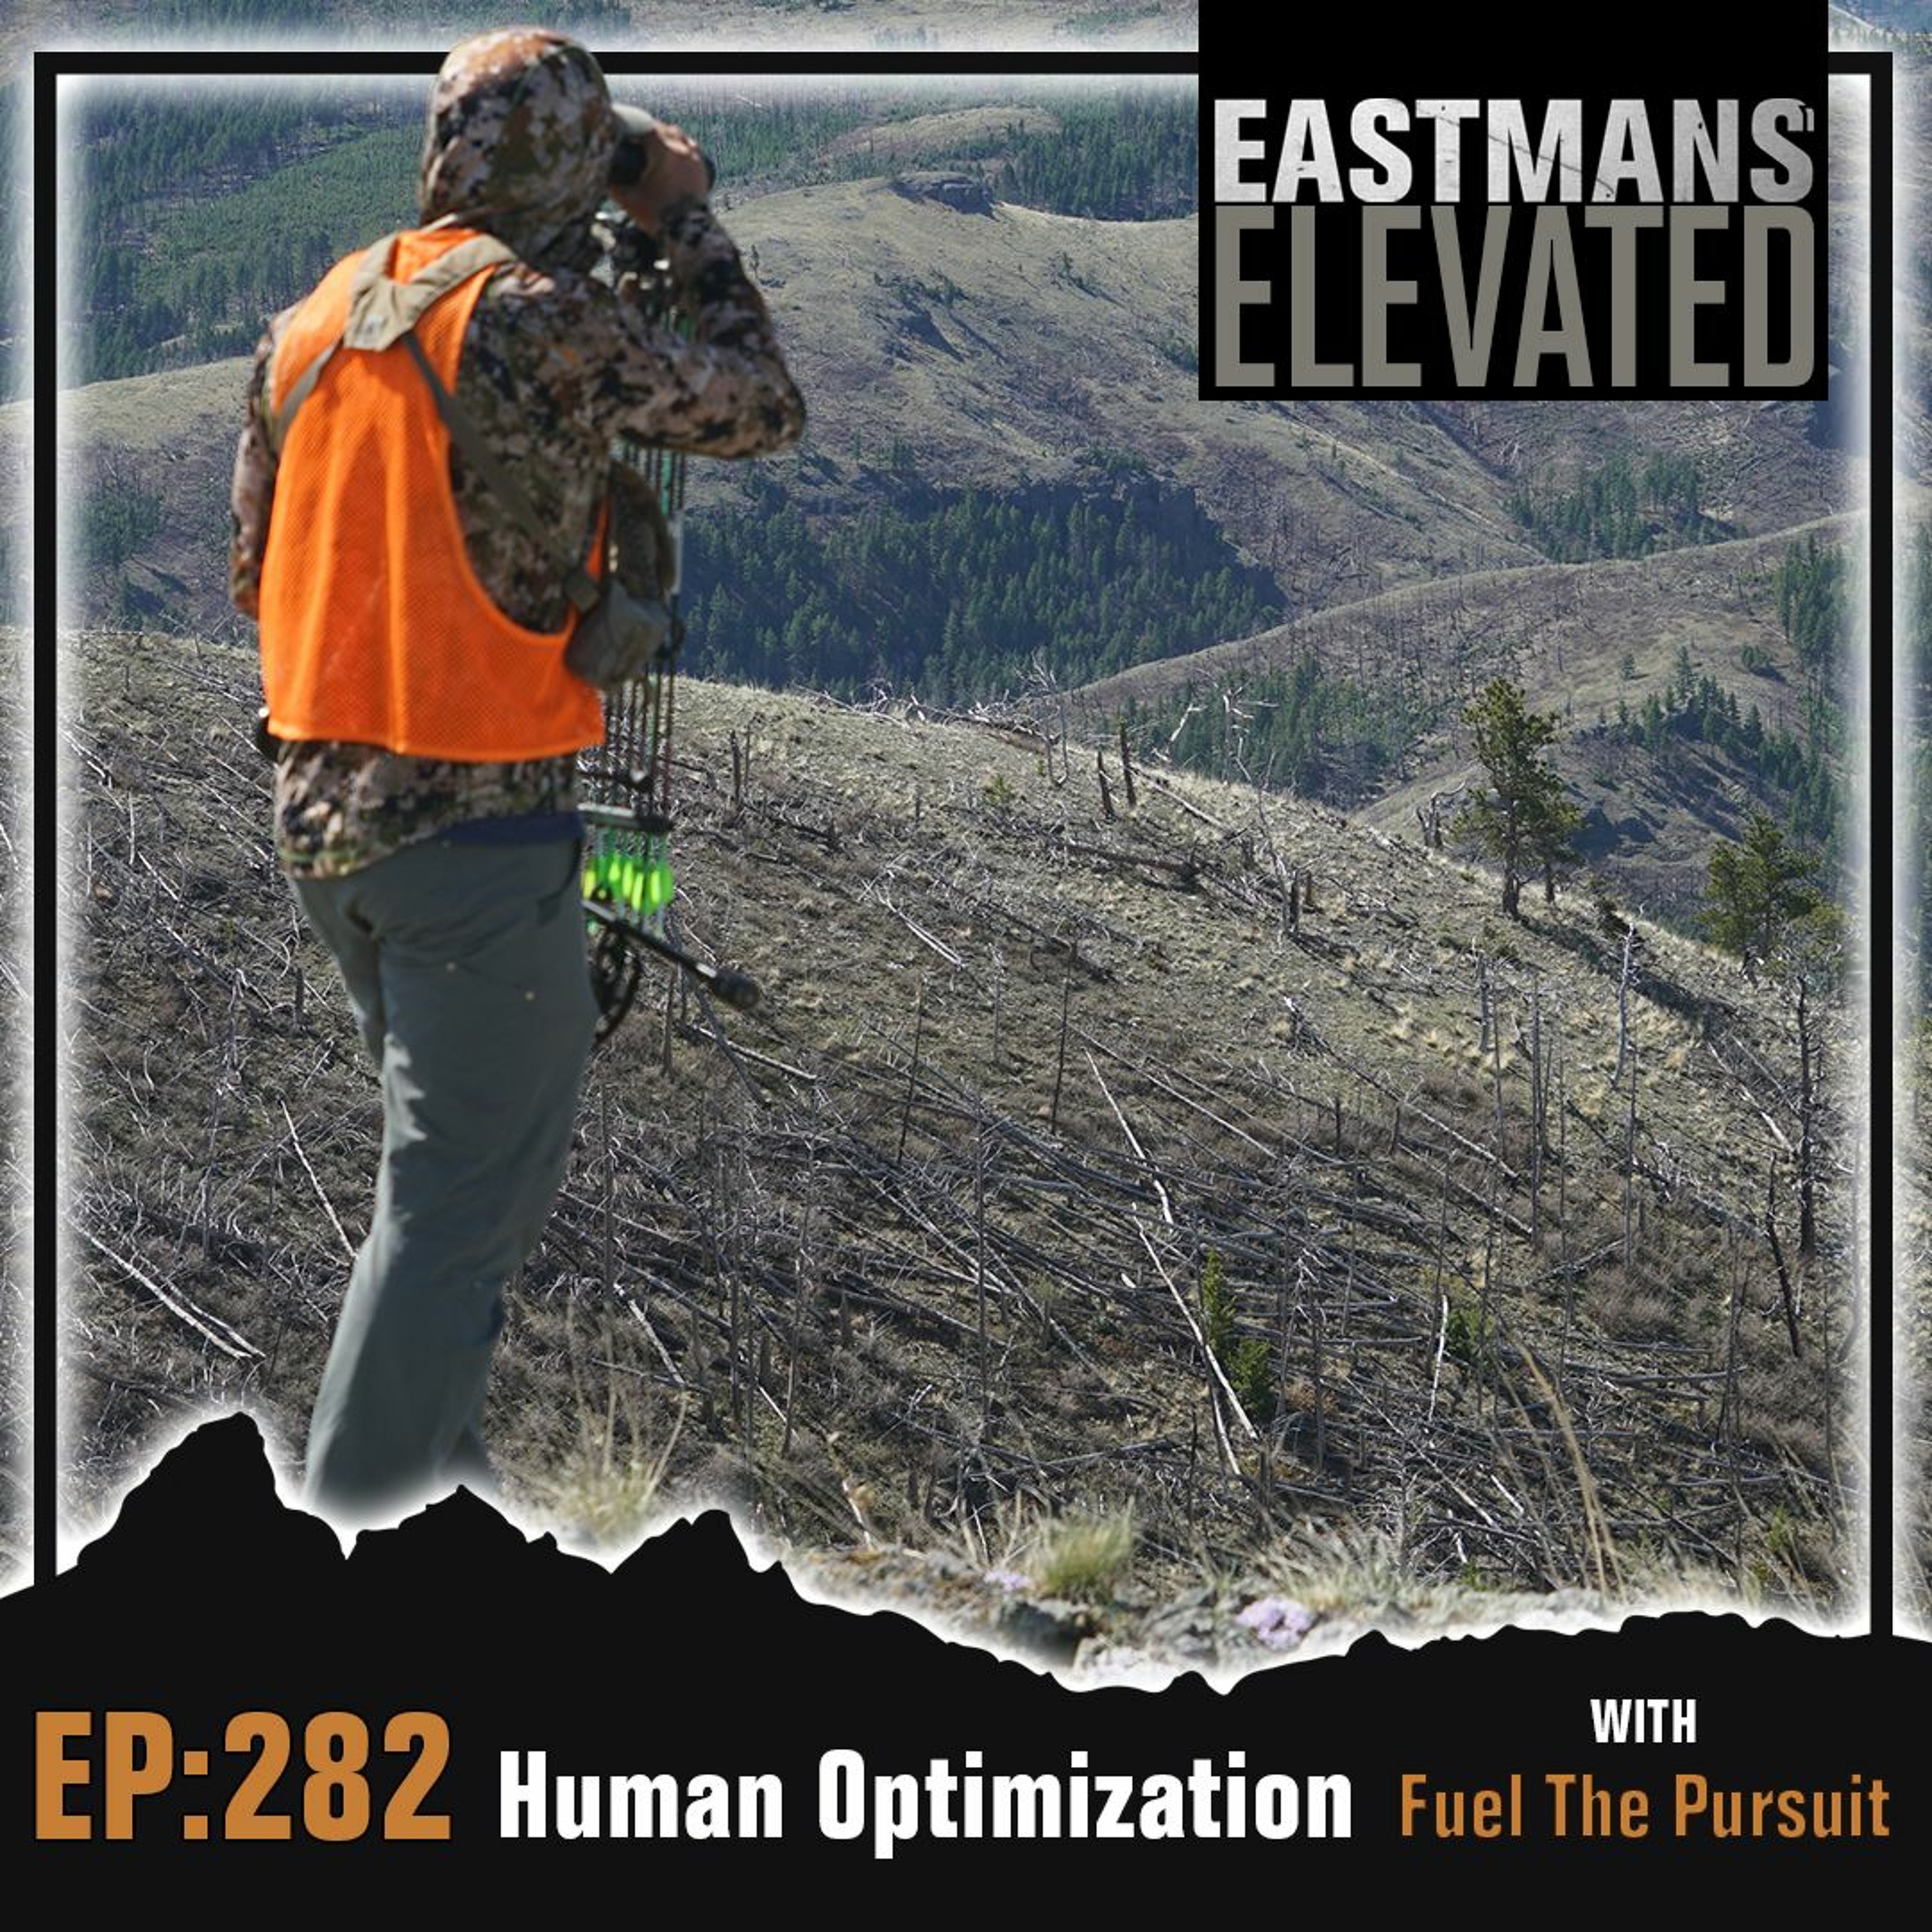 Episode 282: Human Optimization with Fuel The Pursuit